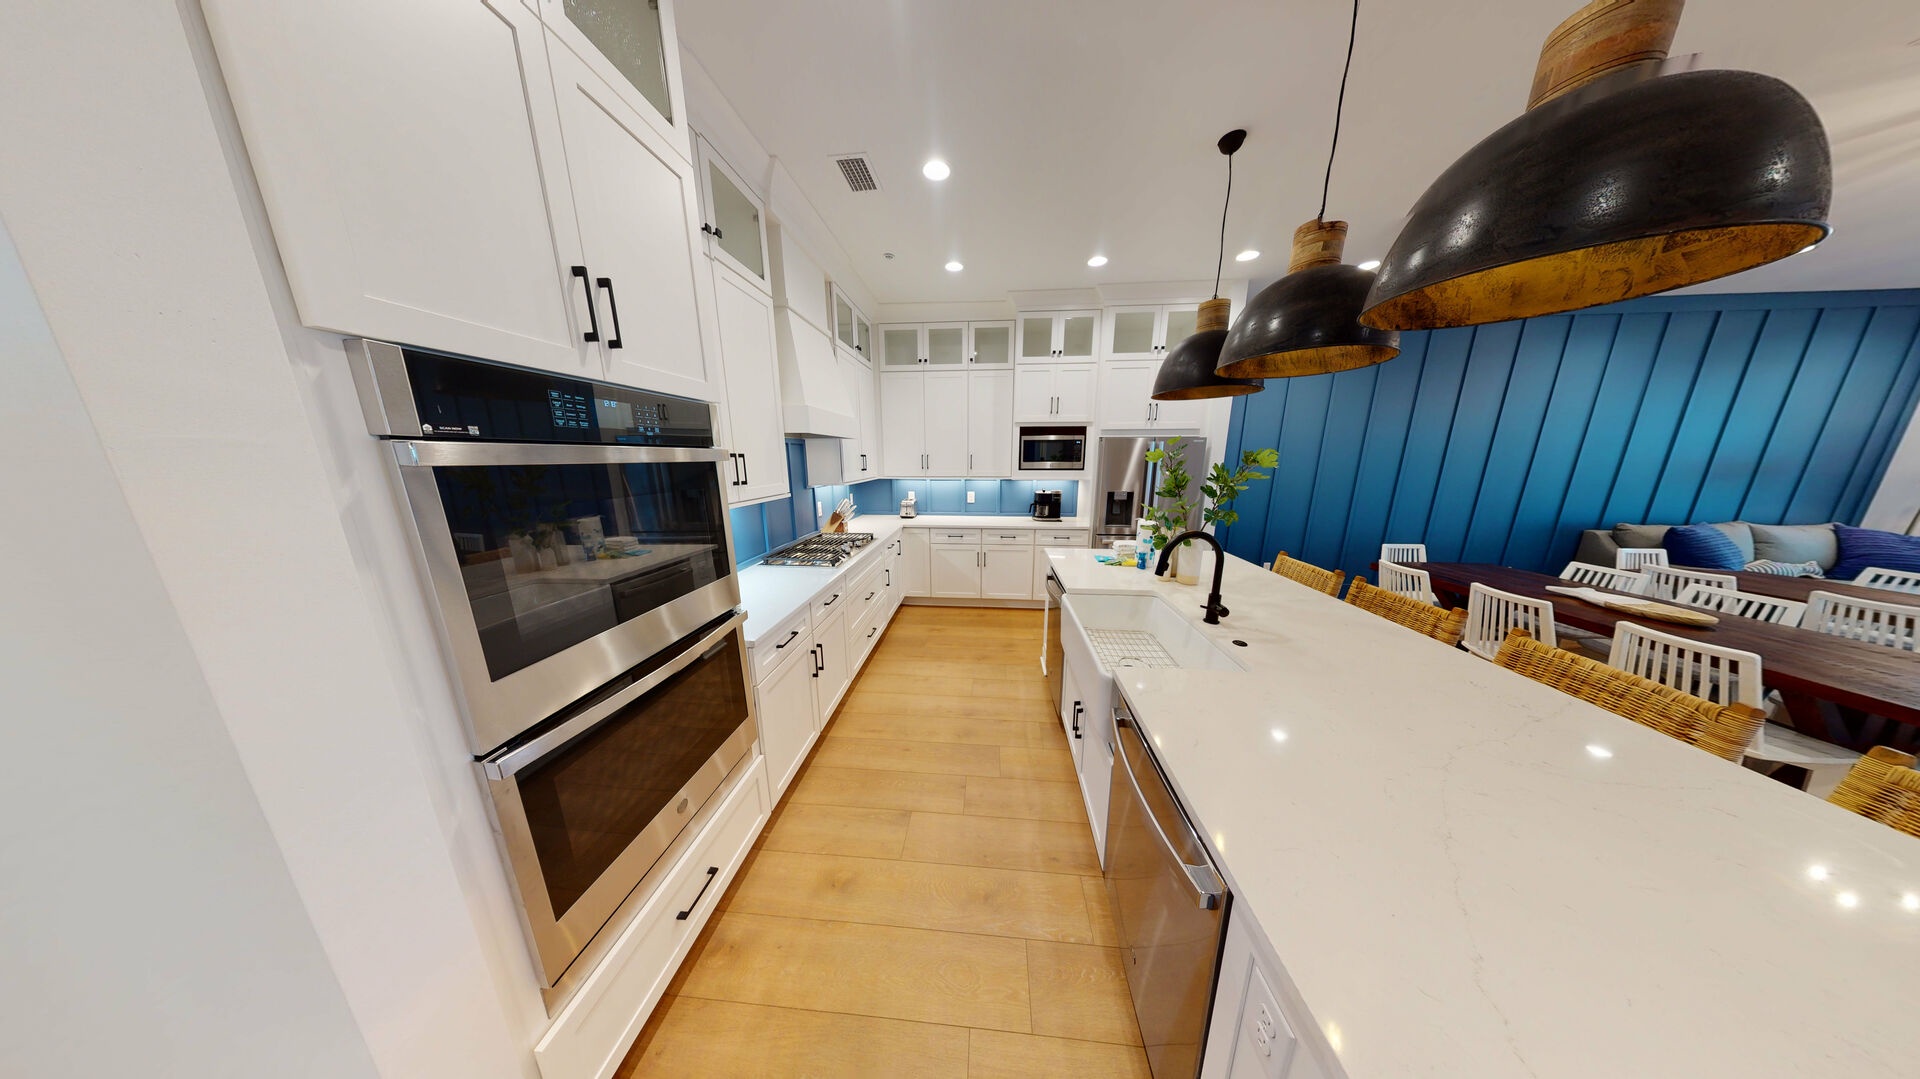 Beautiful "double" kitchen provides double the appliances